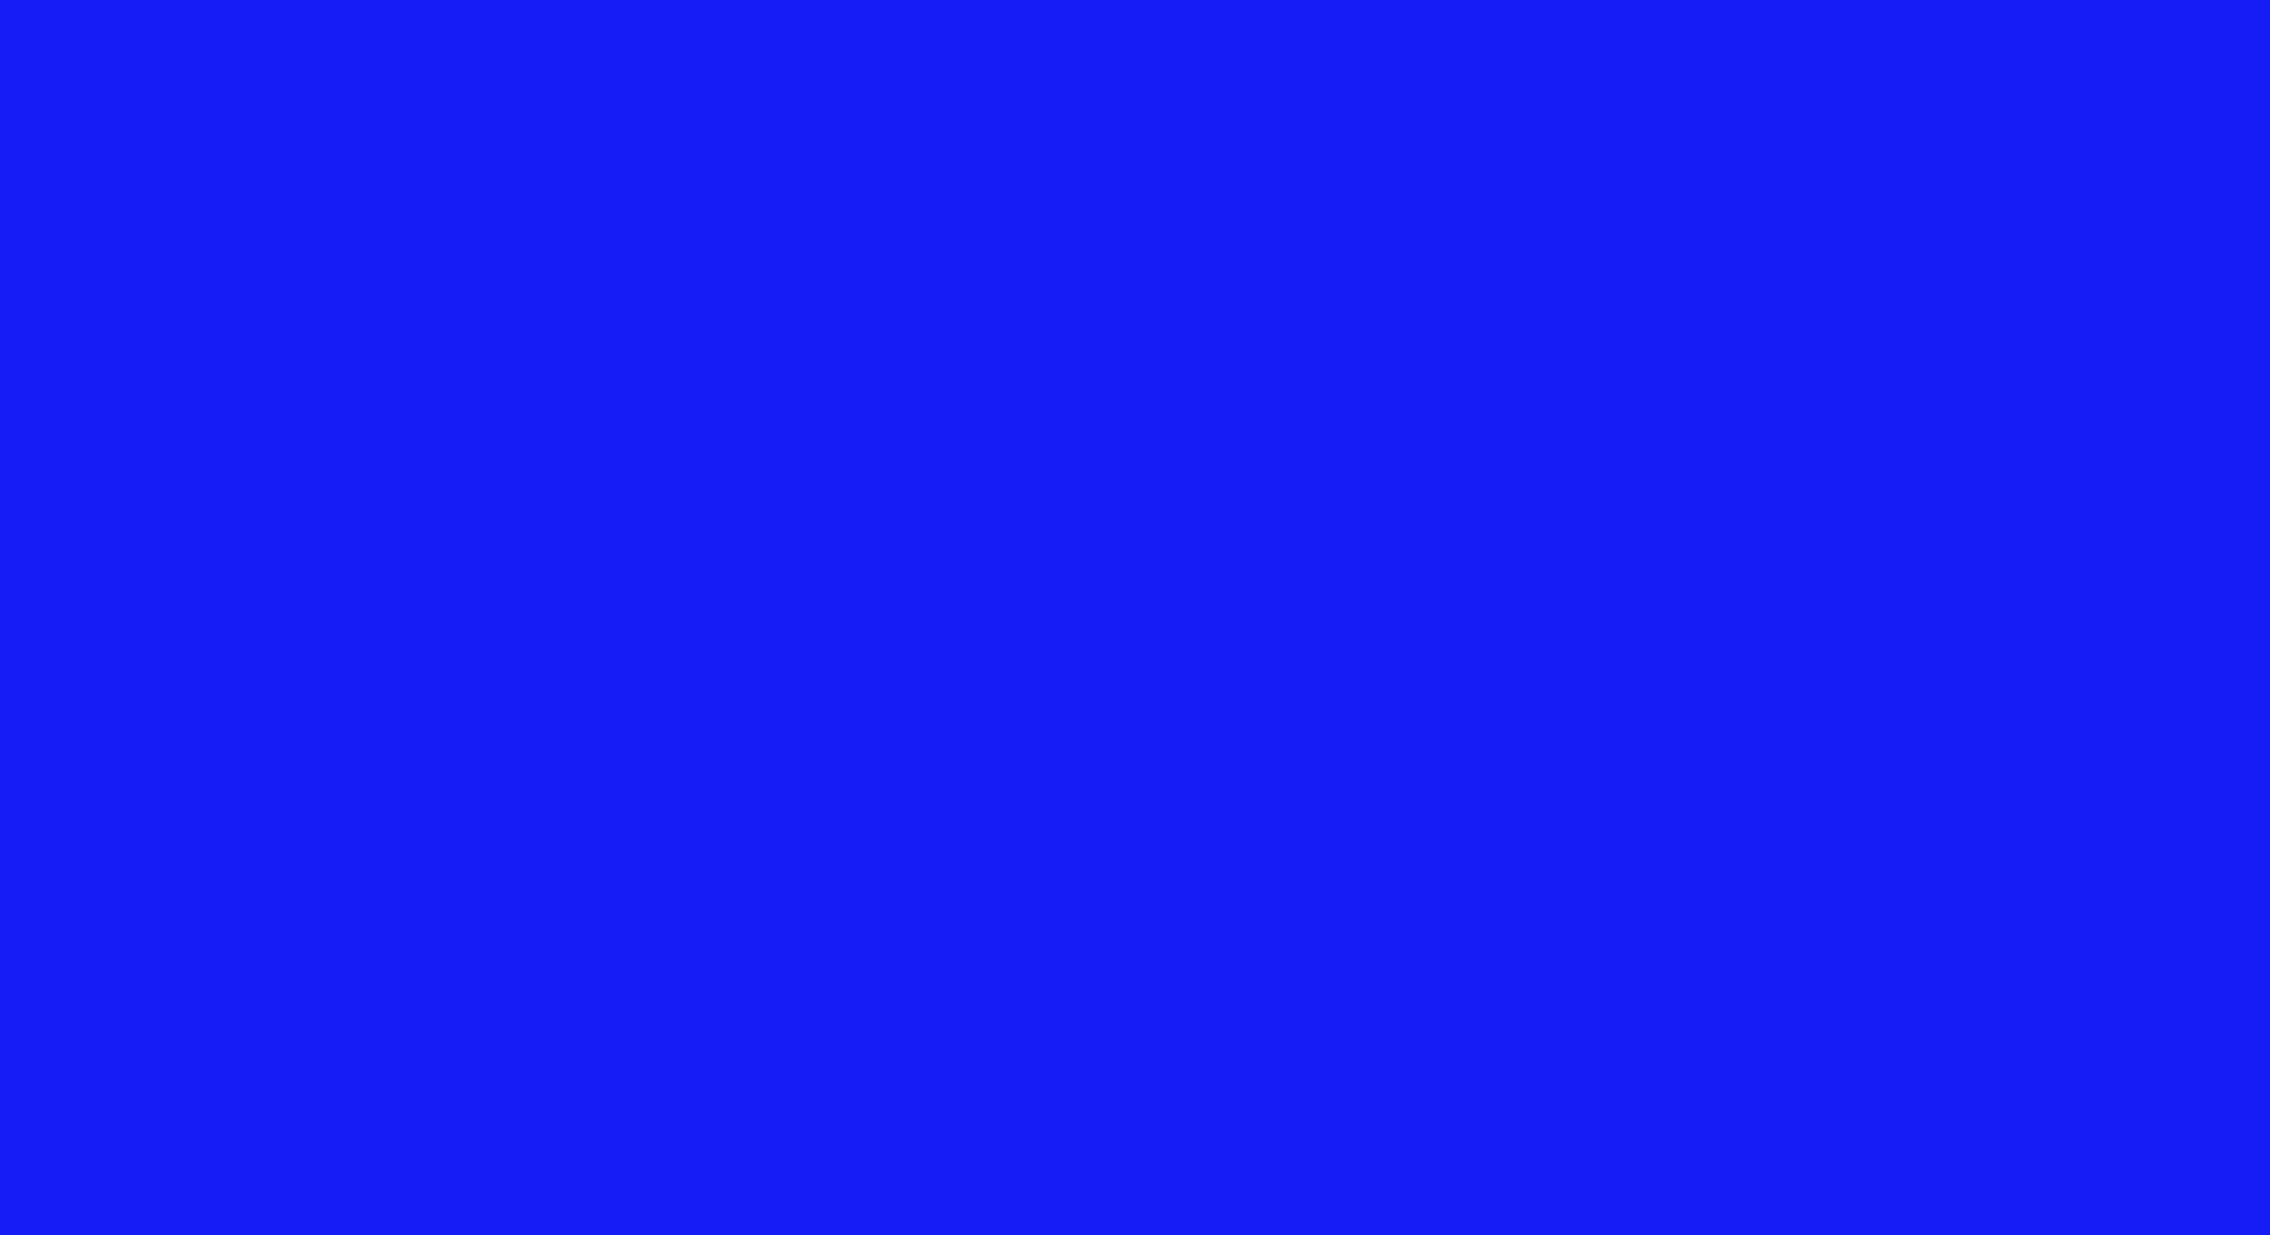 Rückwandfolie blau / schwarz 48 cm hoch